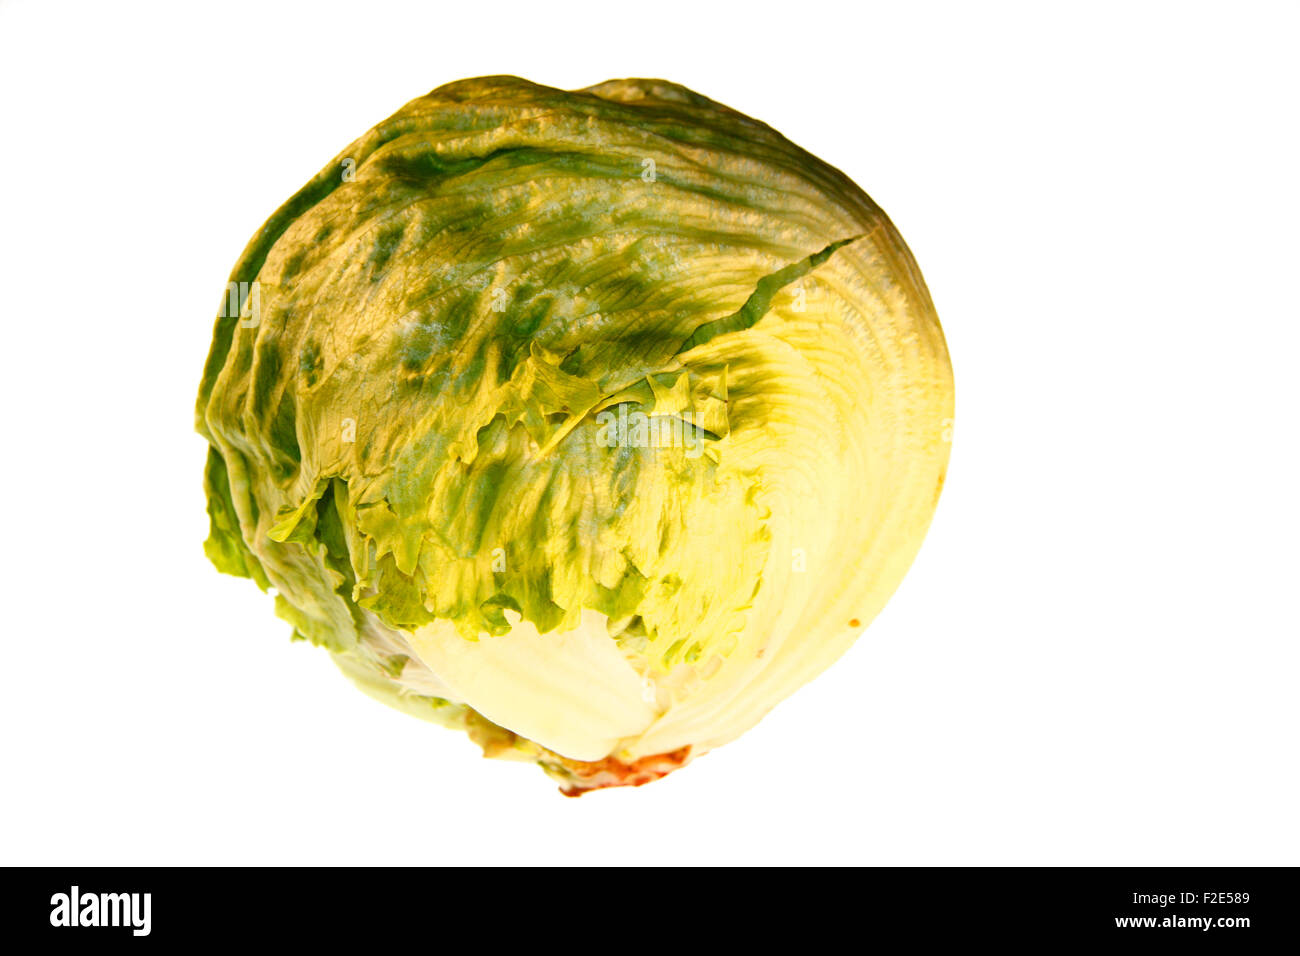 Kopfsalat / gruener Salat - Symbolbild Nahrungsmittel. Stock Photo